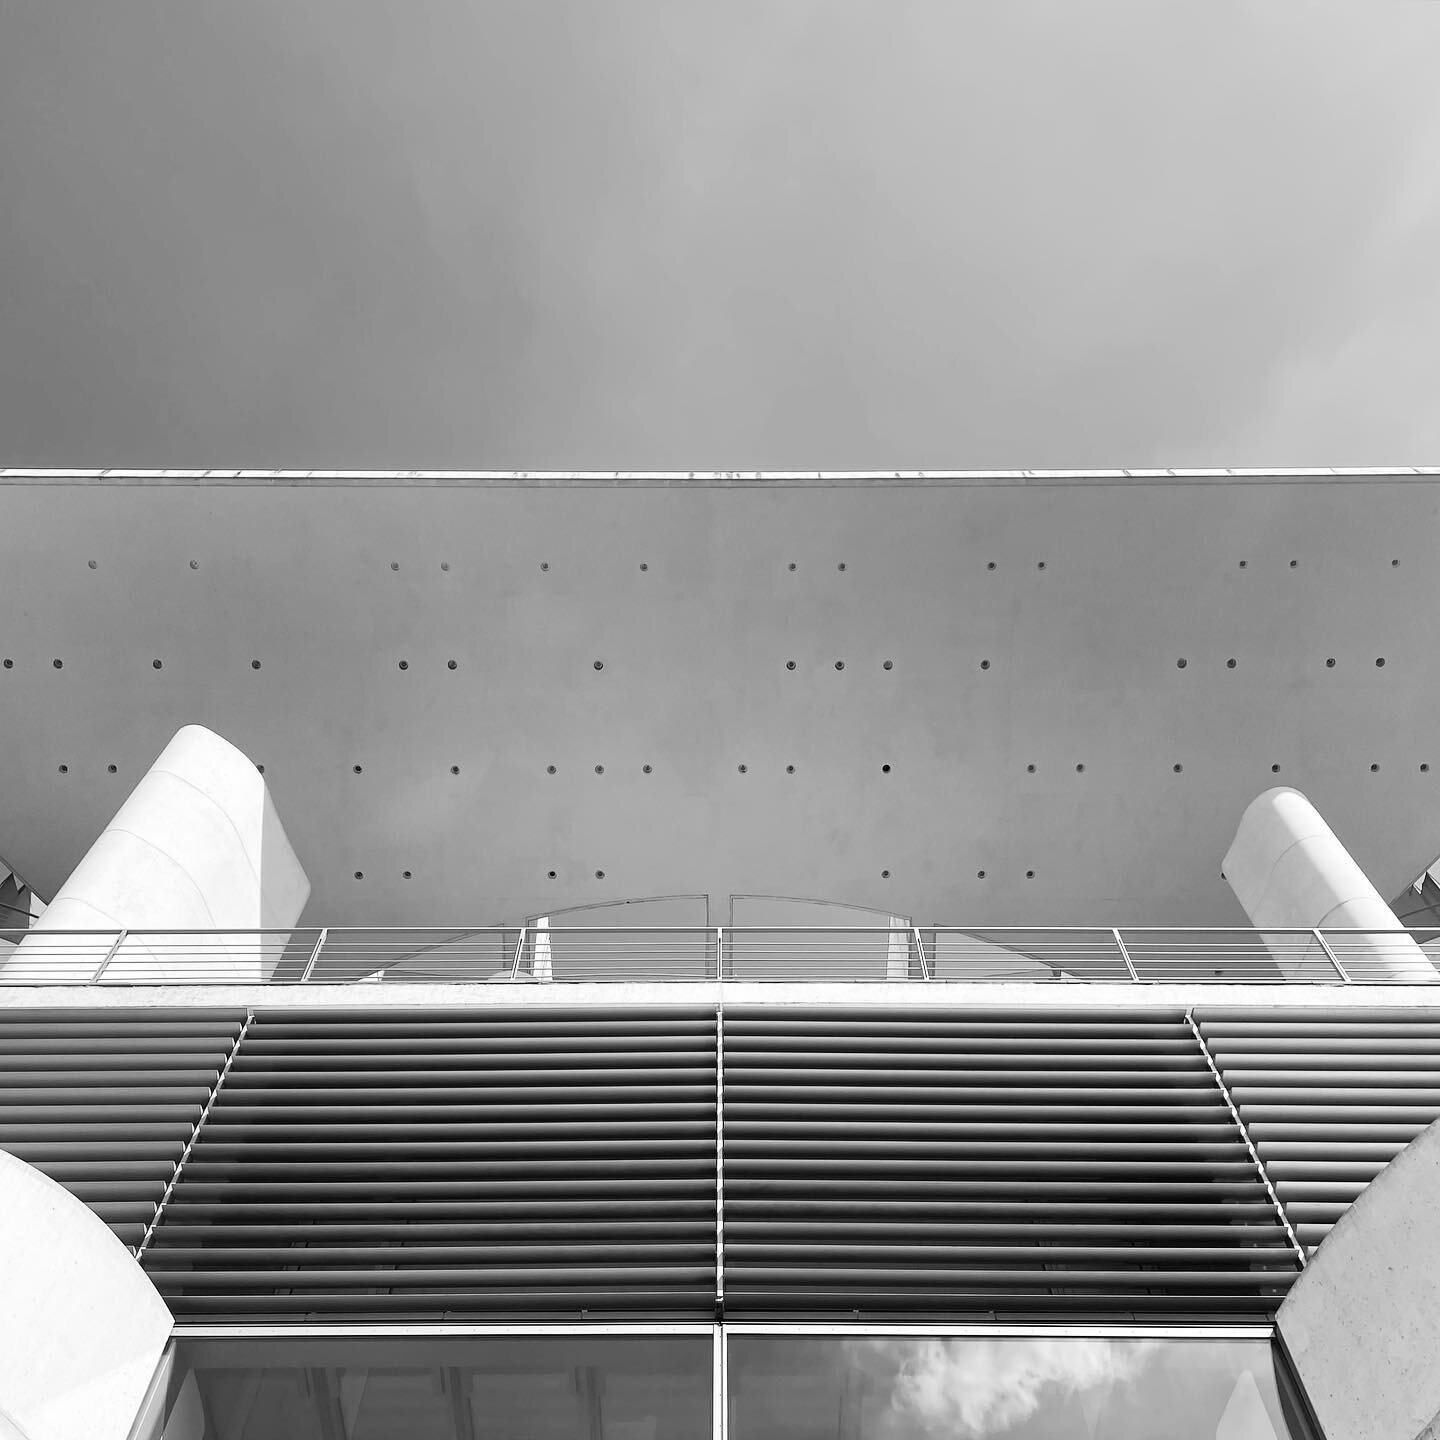 scholz.
&mdash;

#regierungsviertel #bundeskanzleramt #schultesfrankarchitekten #geometry #berlin #berlincity #igersberlin #berlinlove #visitberlin #visit_berlin #architecture #berlinarchitecture #instaarchitecture #architecture_minimal #lookup #faca